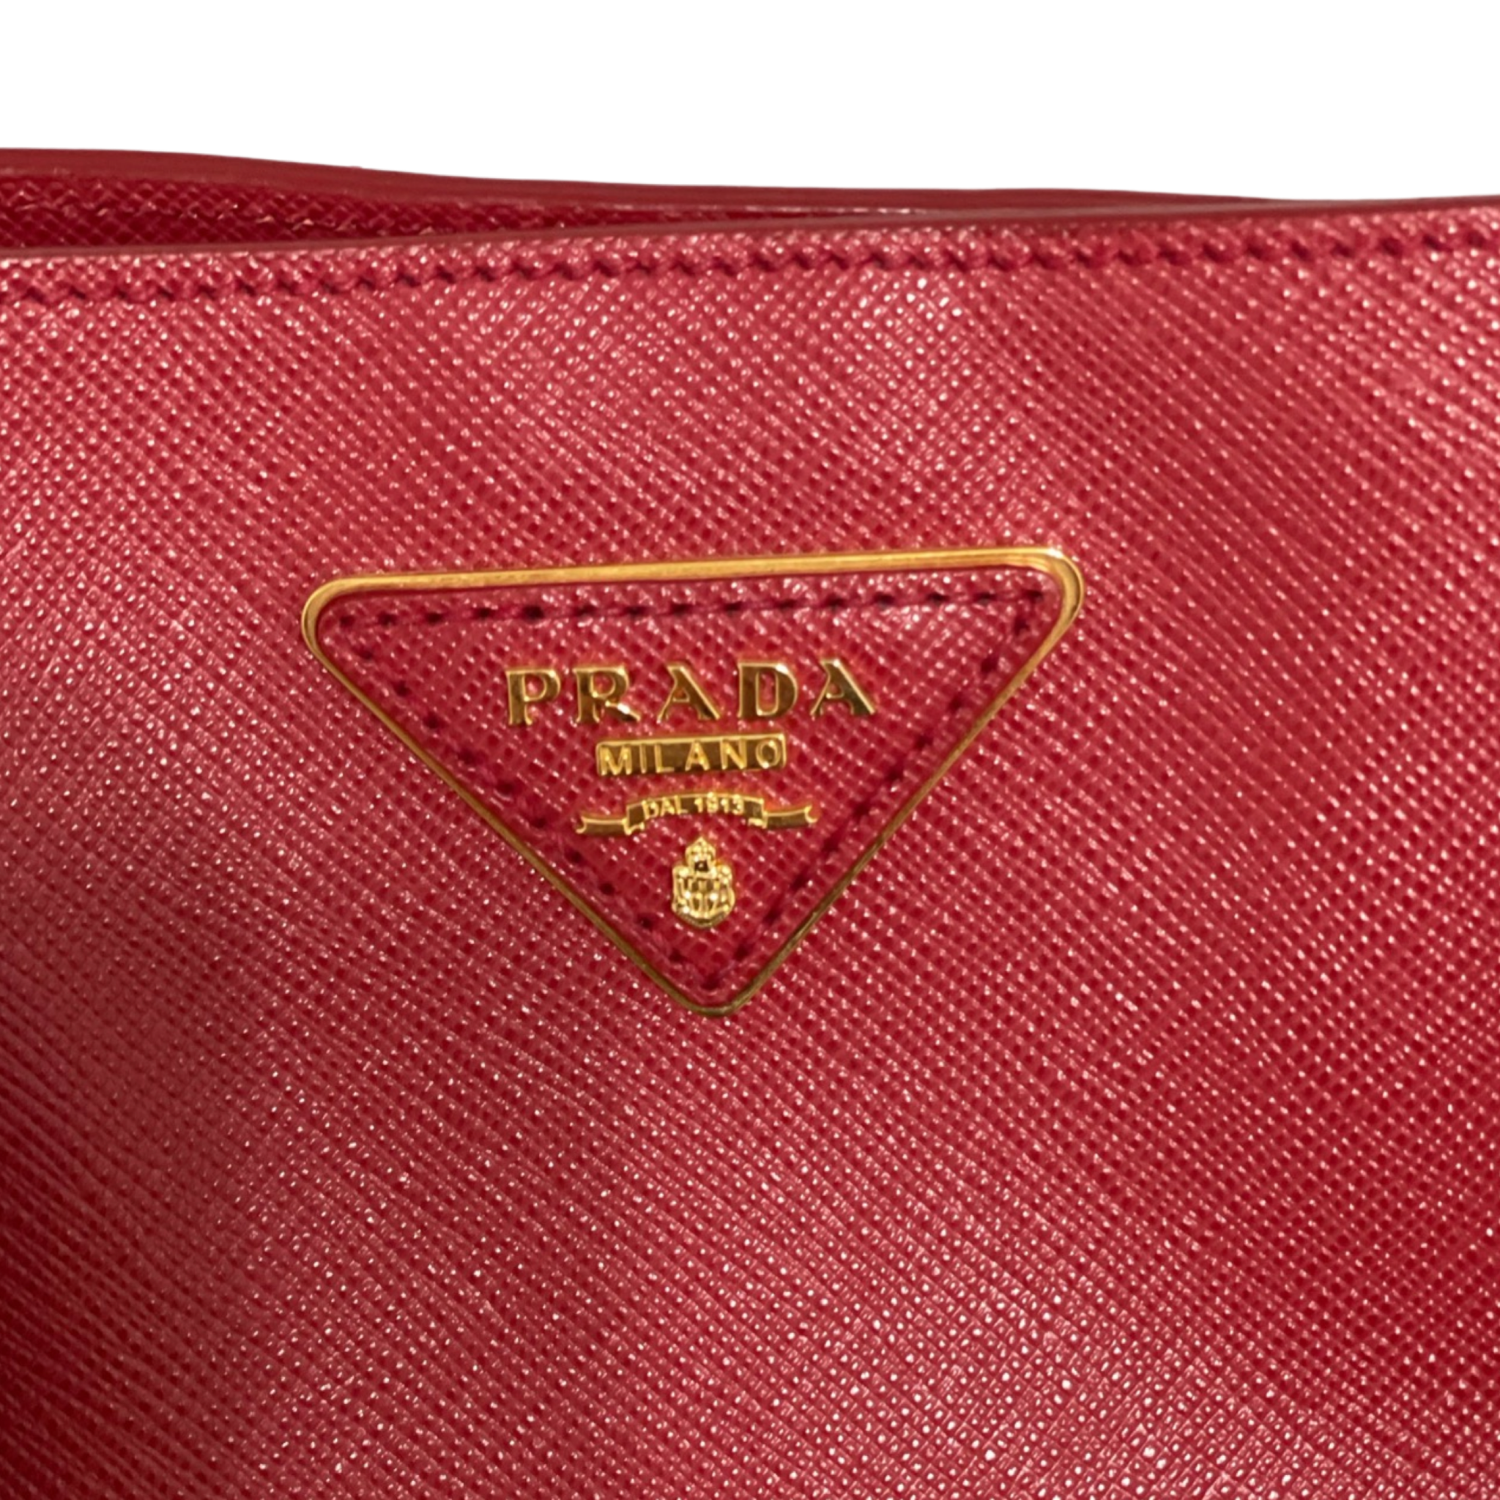 Saffiano leather handbag Prada Red in Leather - 33301839